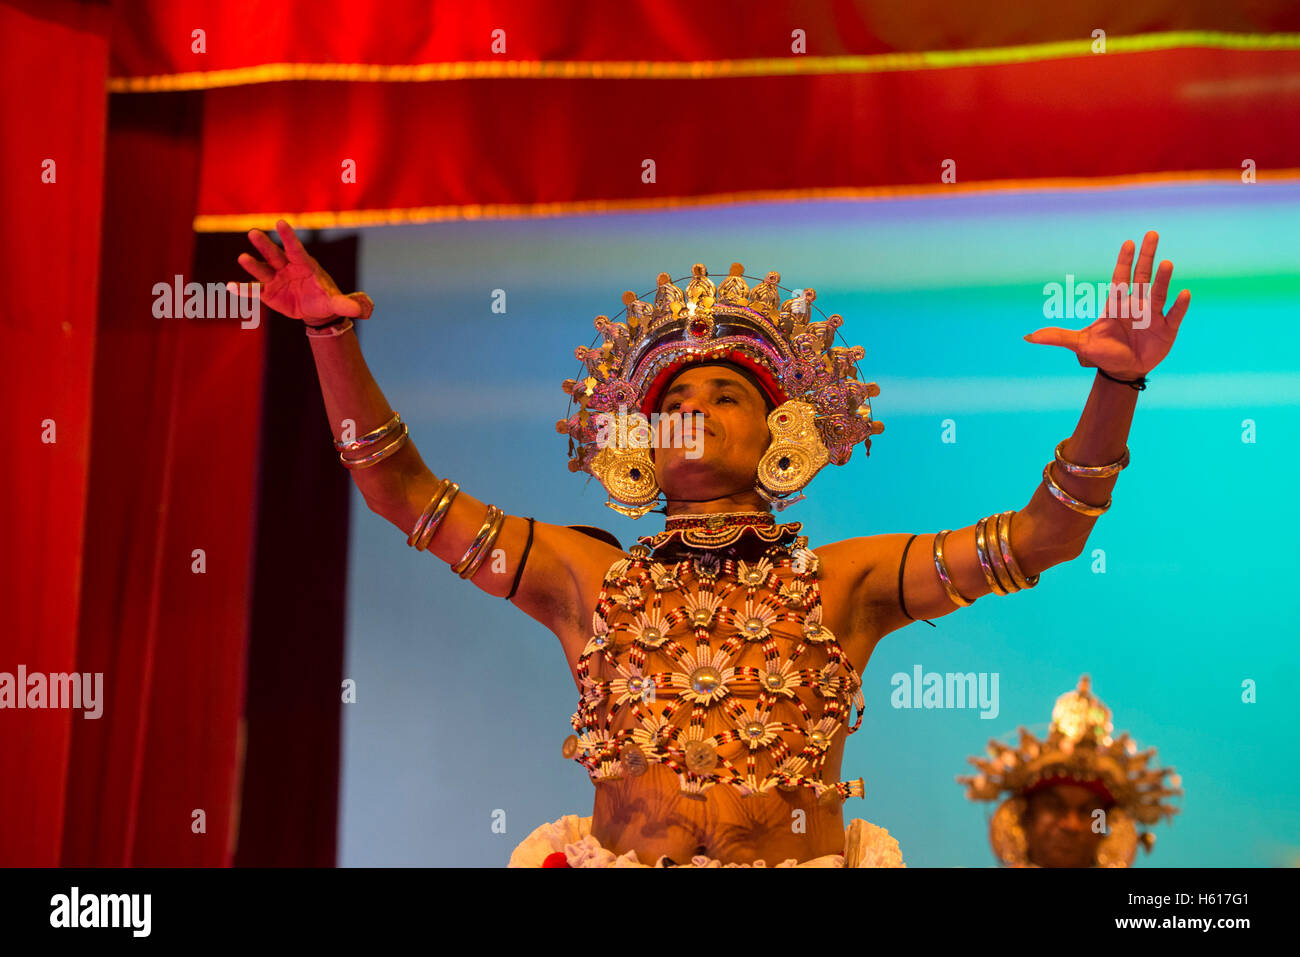 Traditionellen Kandy-Tanz-show, Kandy, Sri Lanka Stockfoto